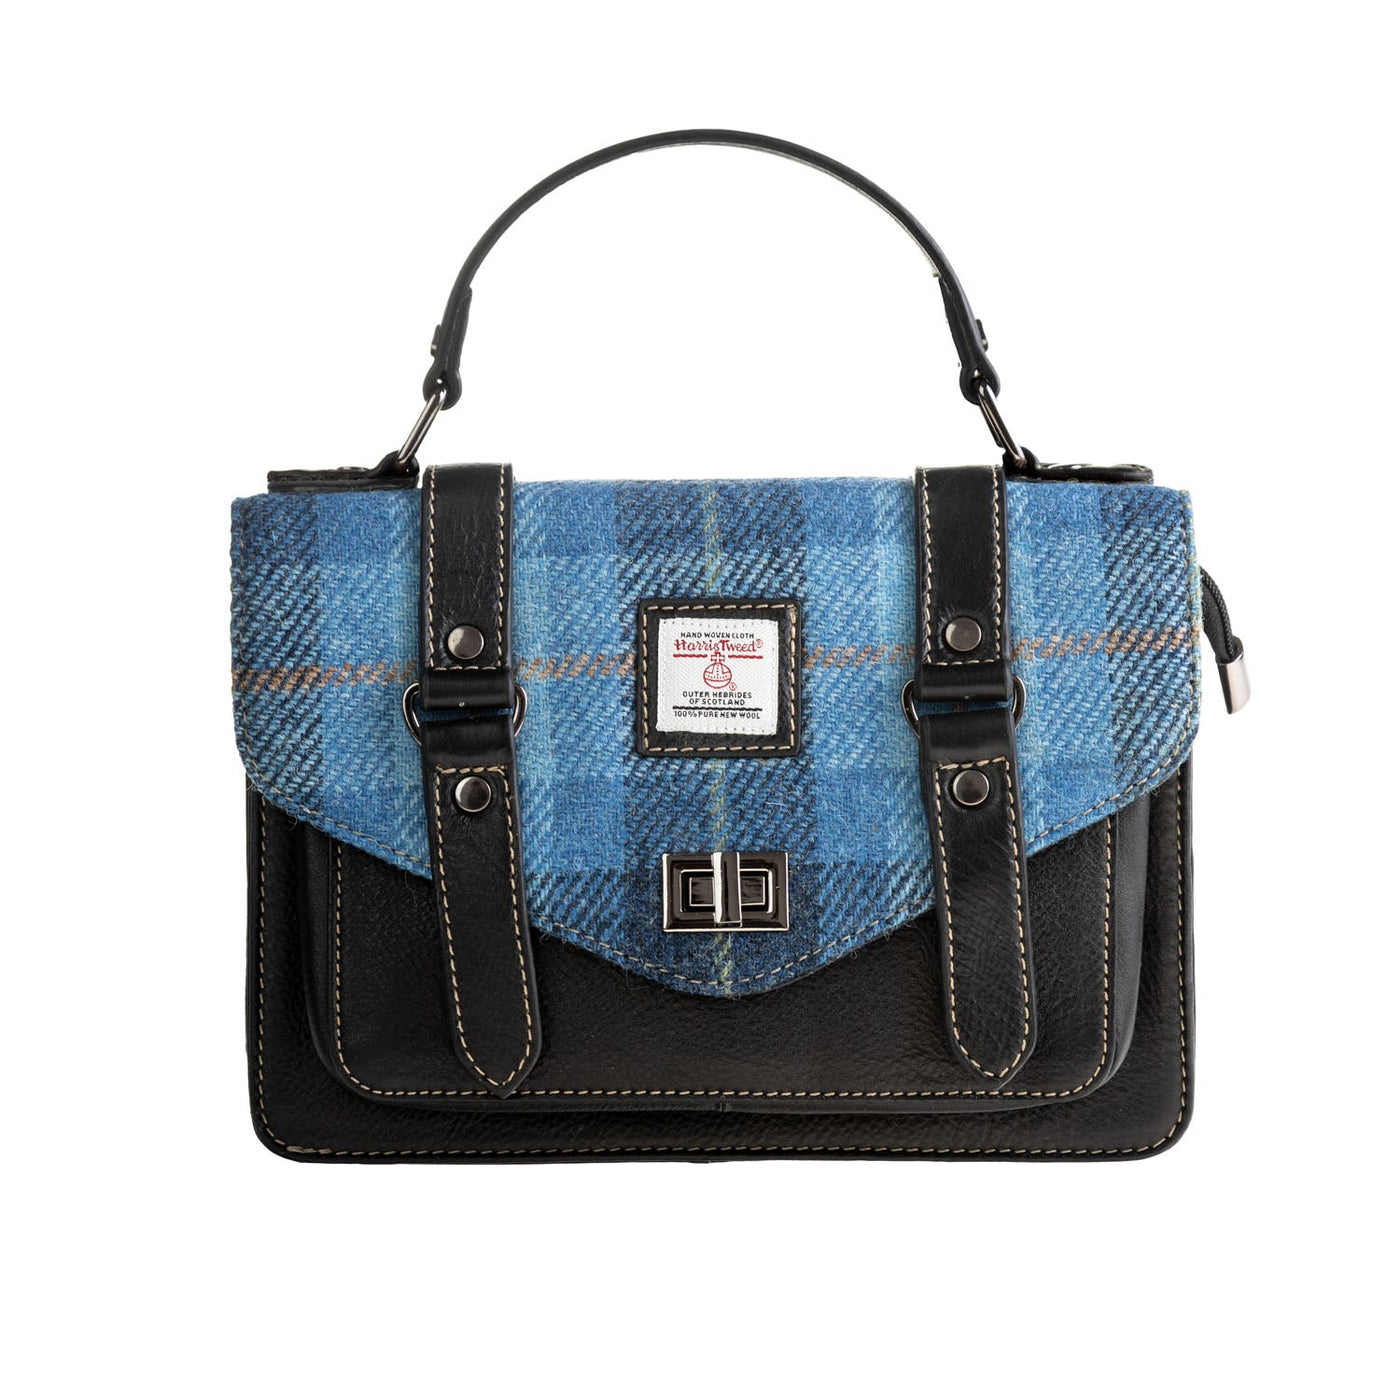 Ht Leather Satchel Bag Blue Check / Black - Dunedin Cashmere